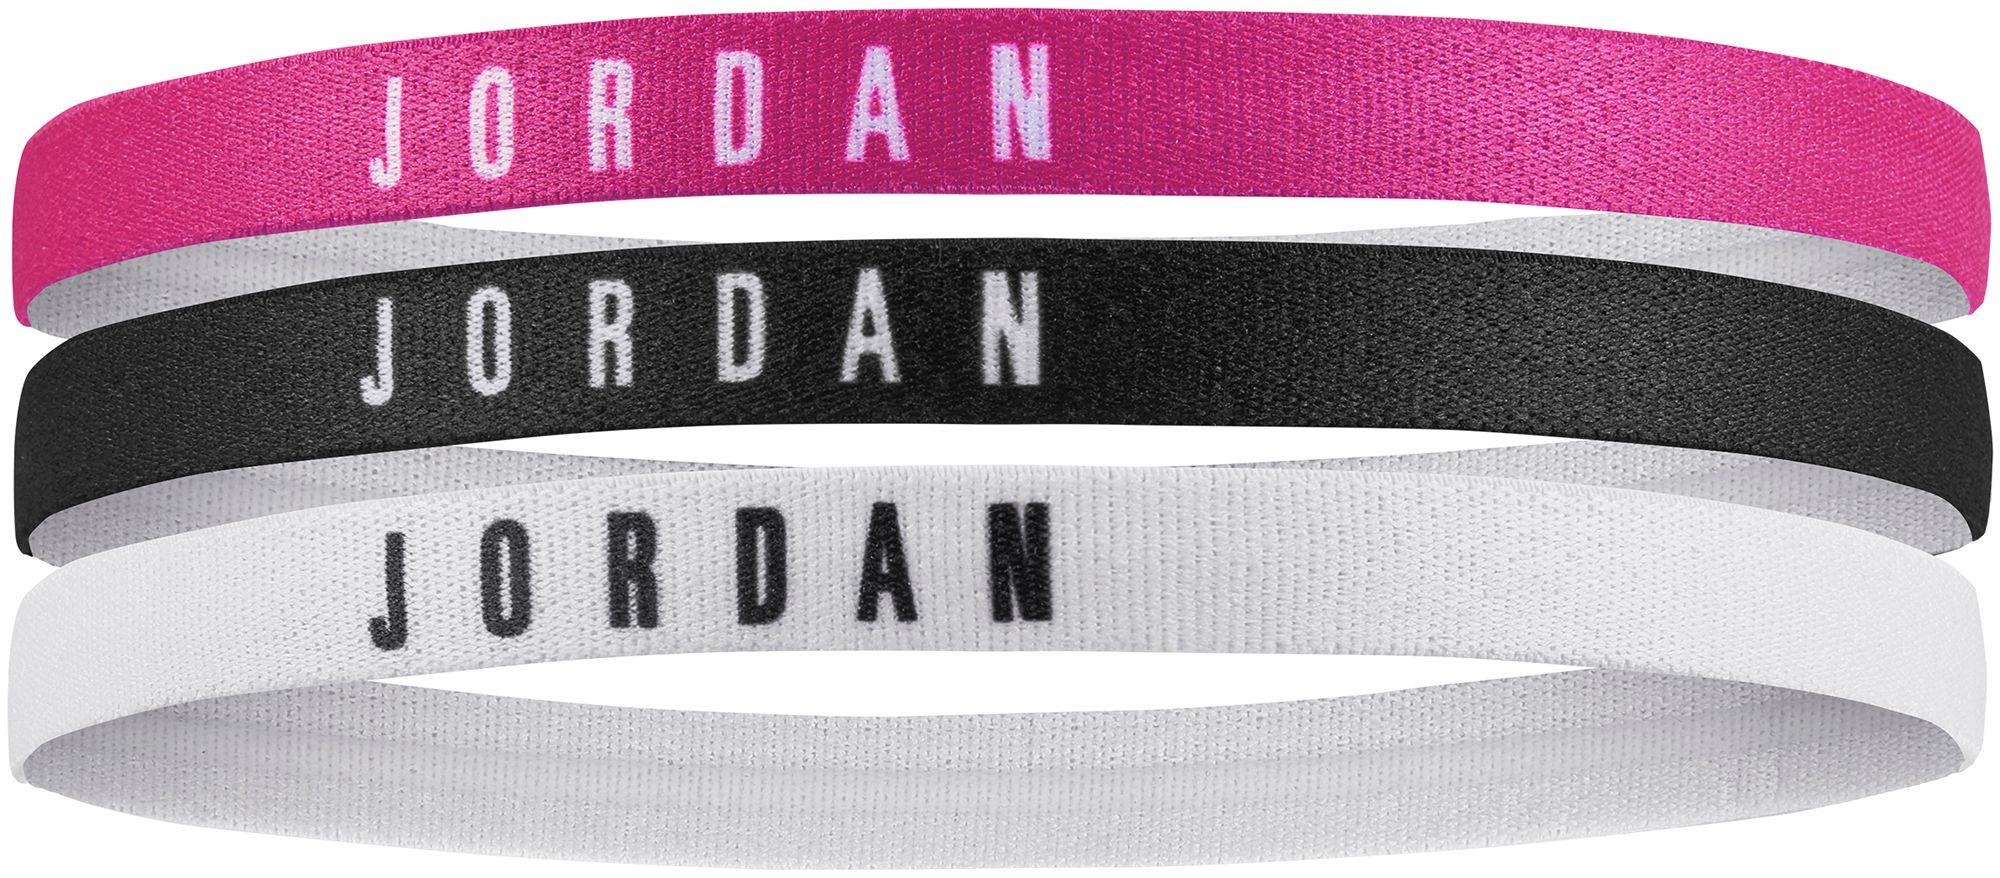 jordan headband price